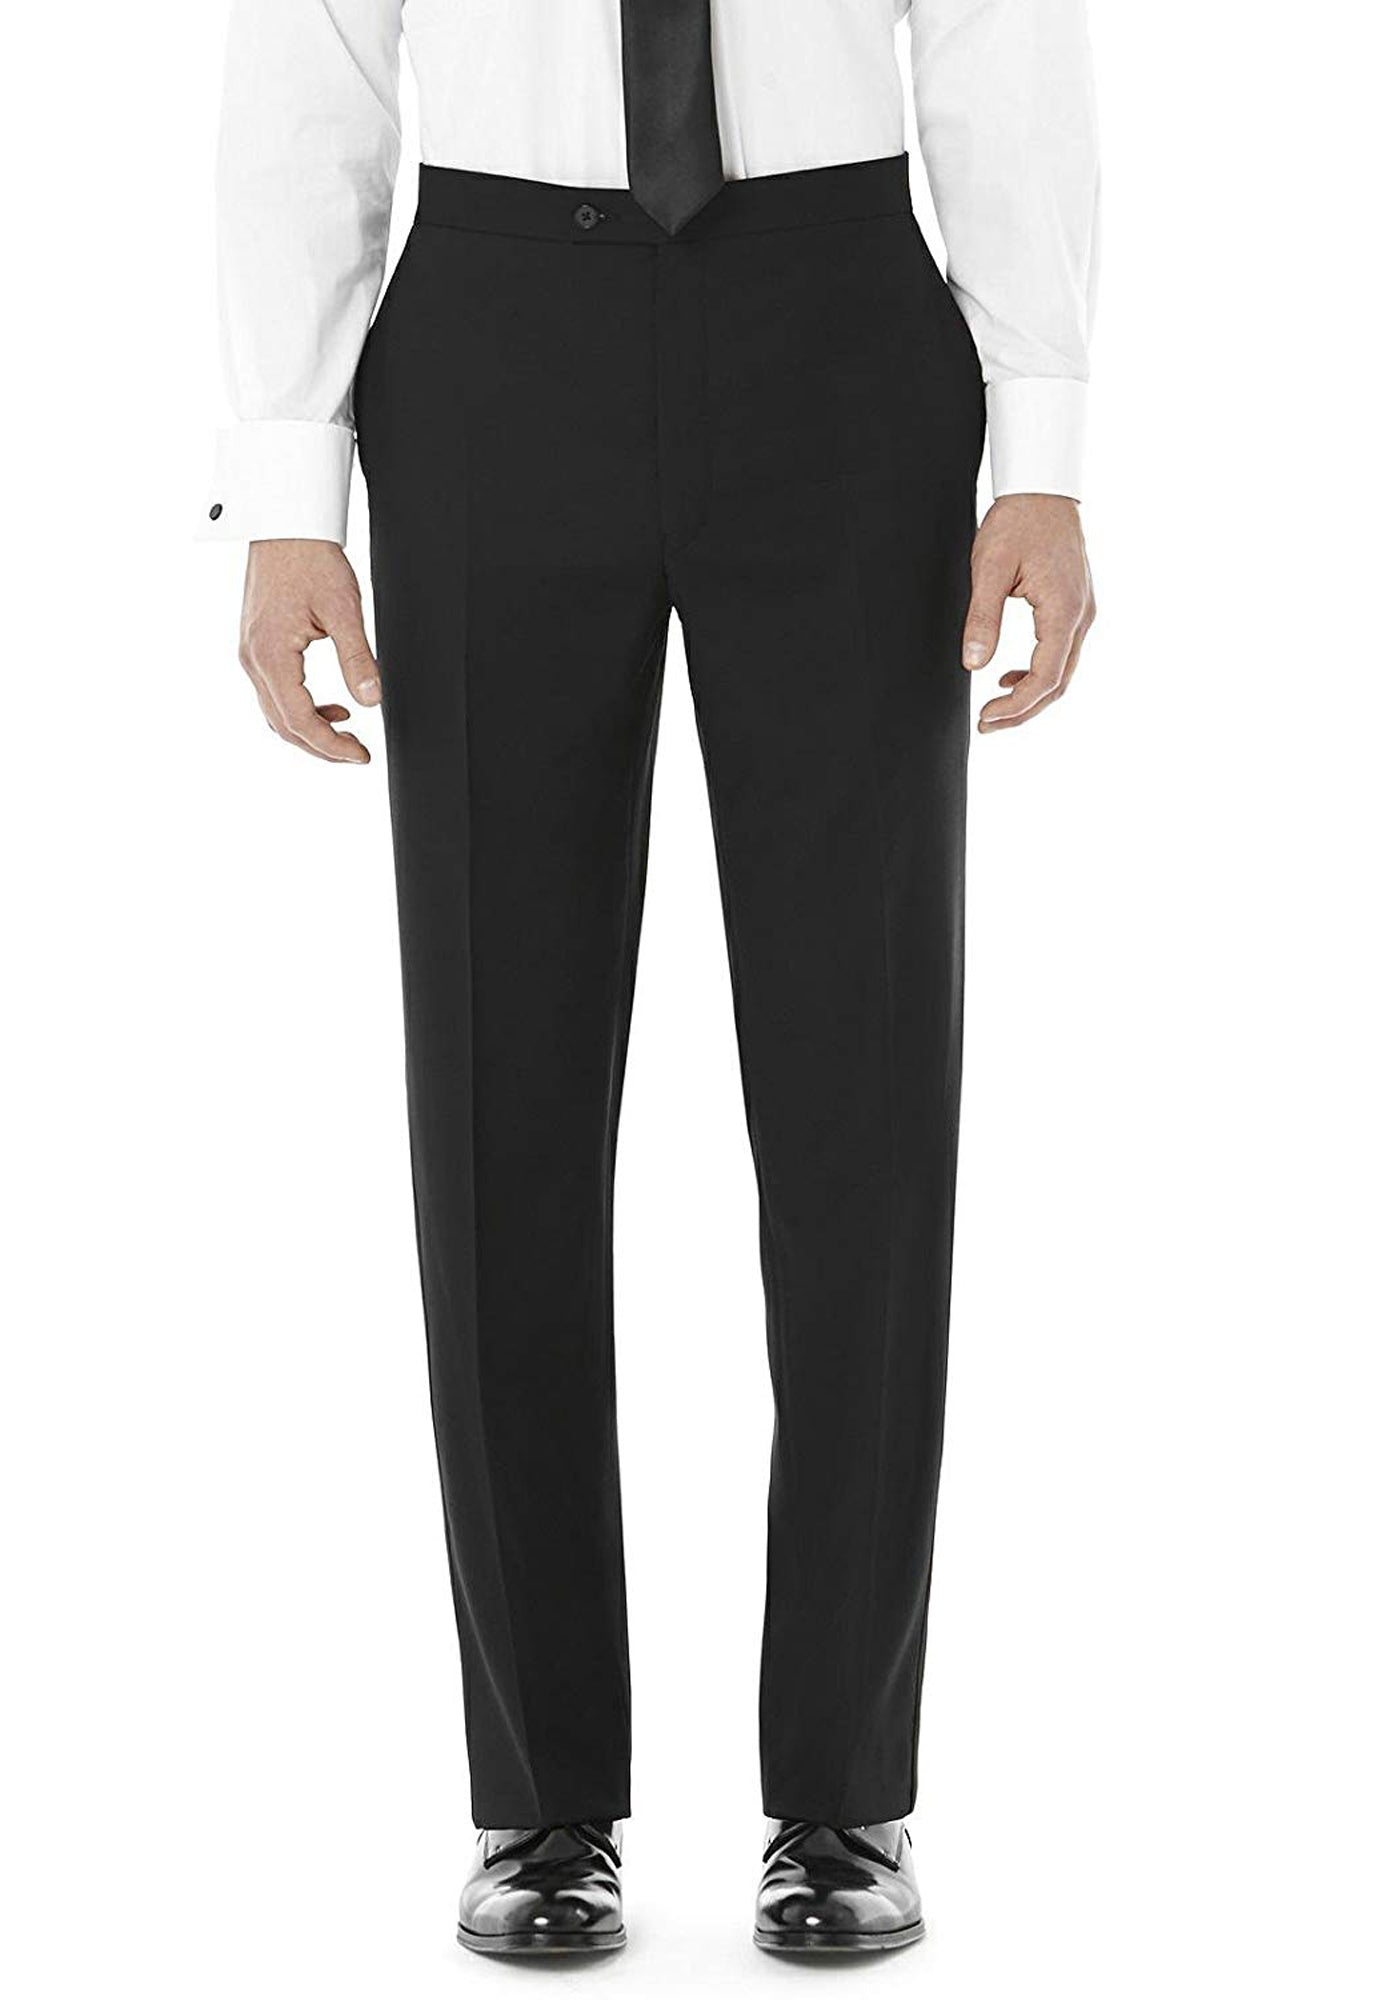 Men's Black, Flat Front, Comfort-Waist Tuxedo Pants with Satin